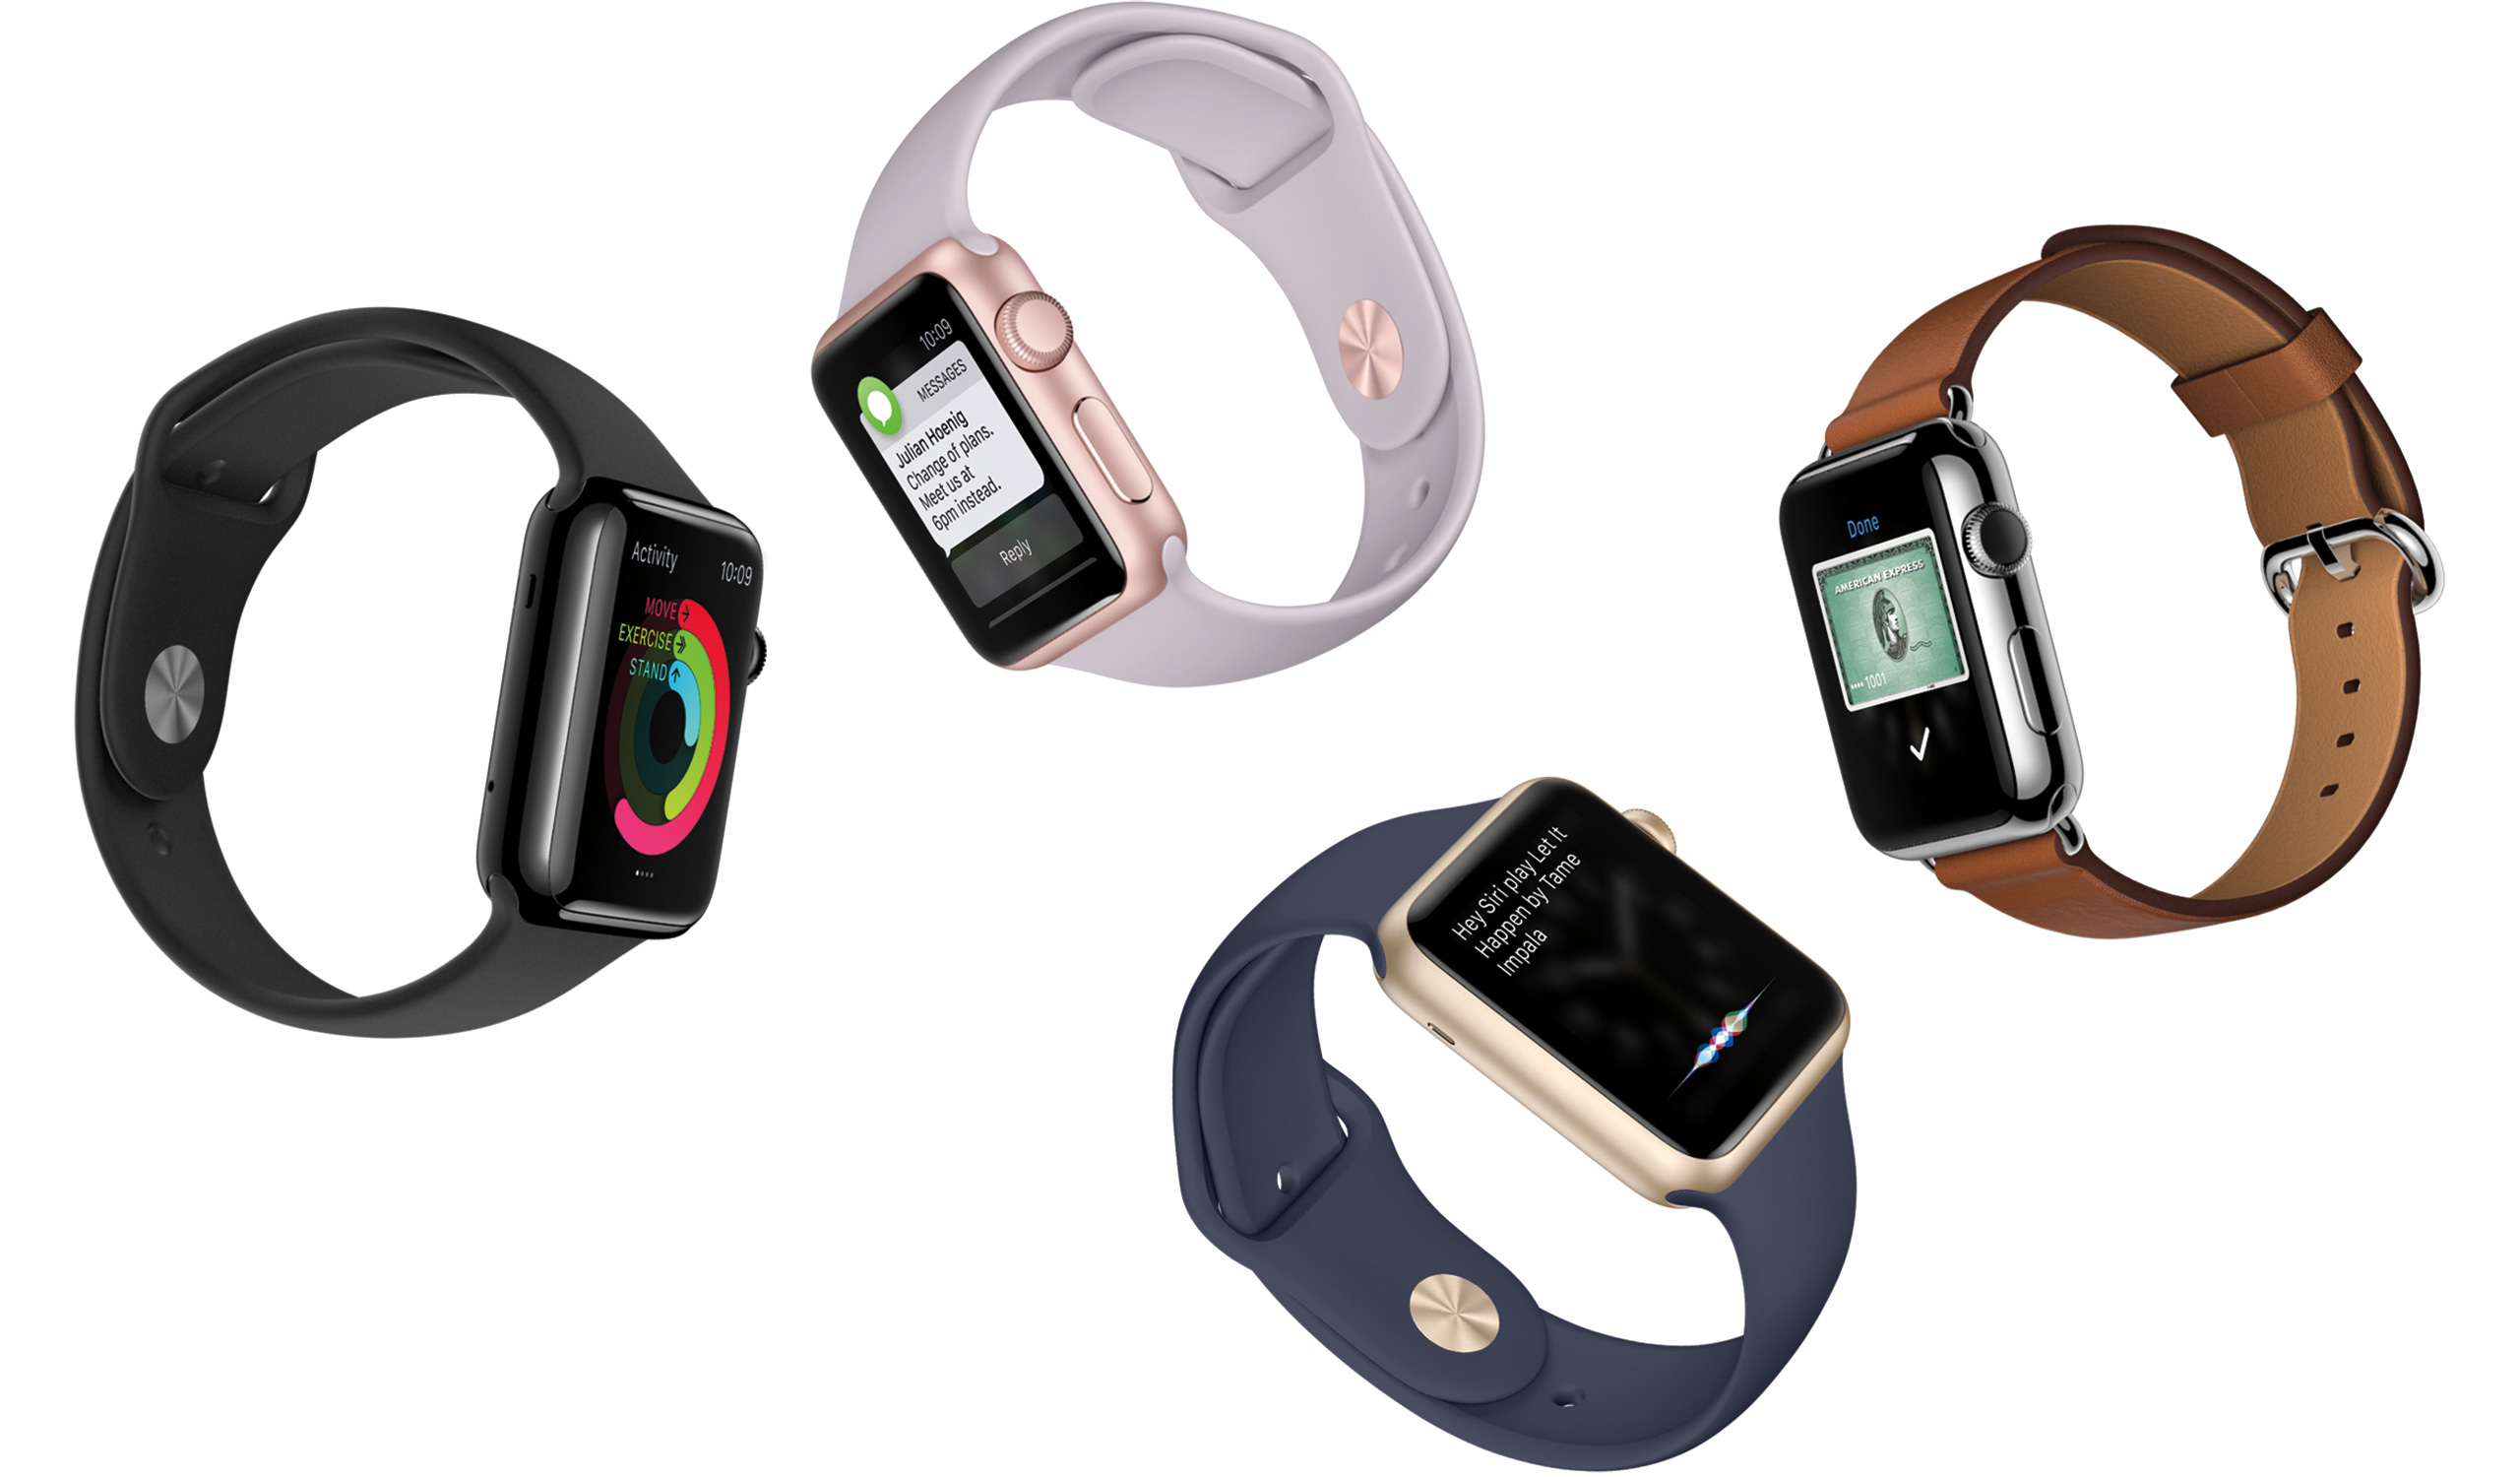 Apple Announces New Gold &amp; Rose Gold Aluminum Apple Watch Sport Models, WatchOS 2.0